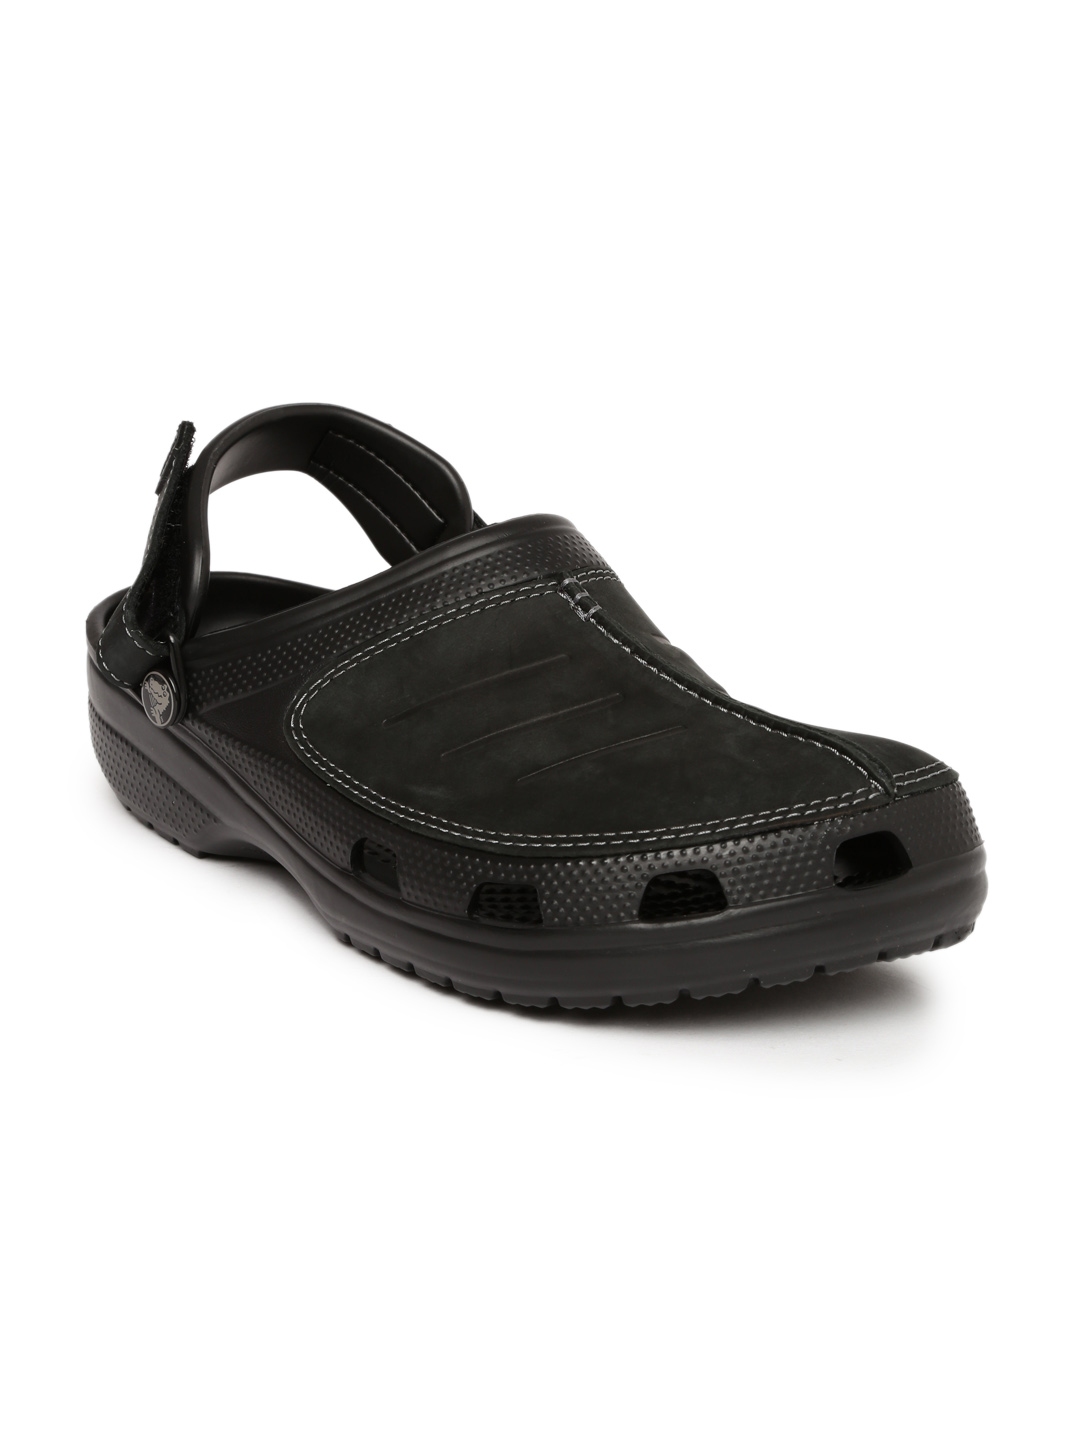 leather crocs for men